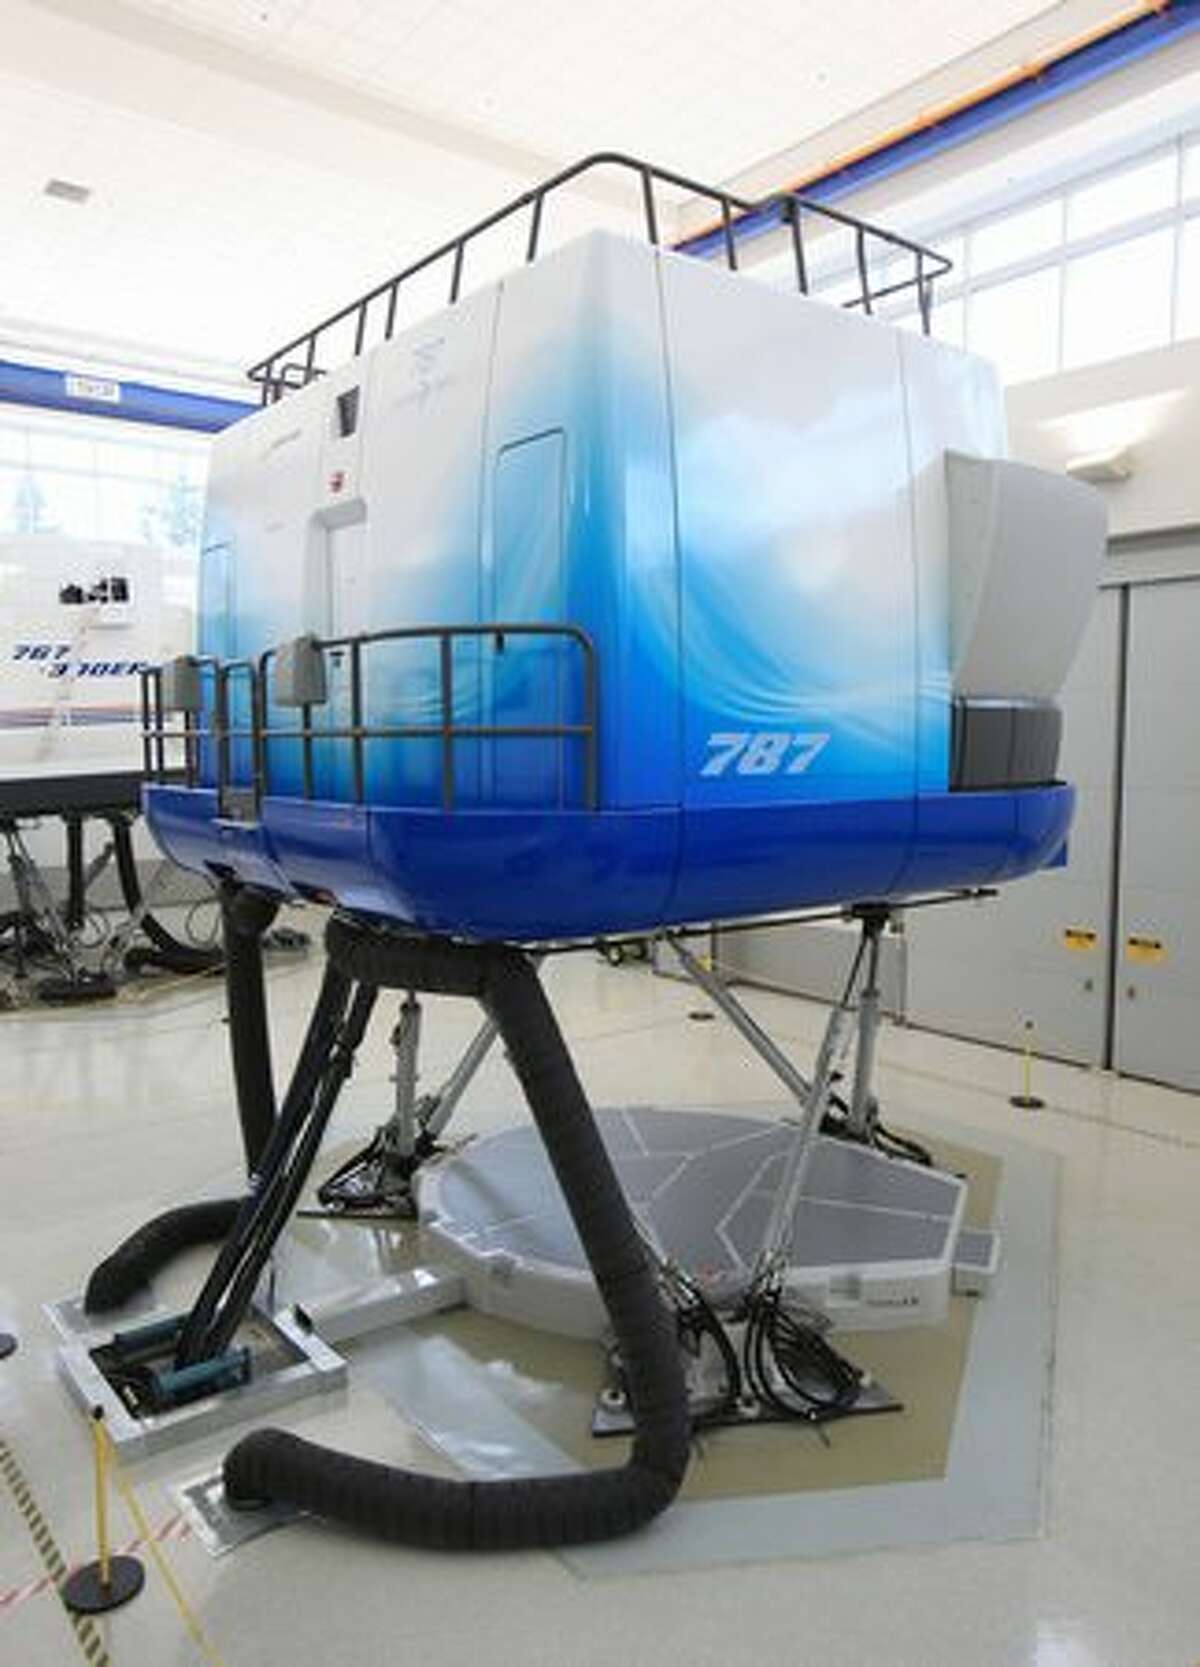 A Boeing 787 Dreamliner full-flight simulator at Boeing's training center in Renton, Wash.